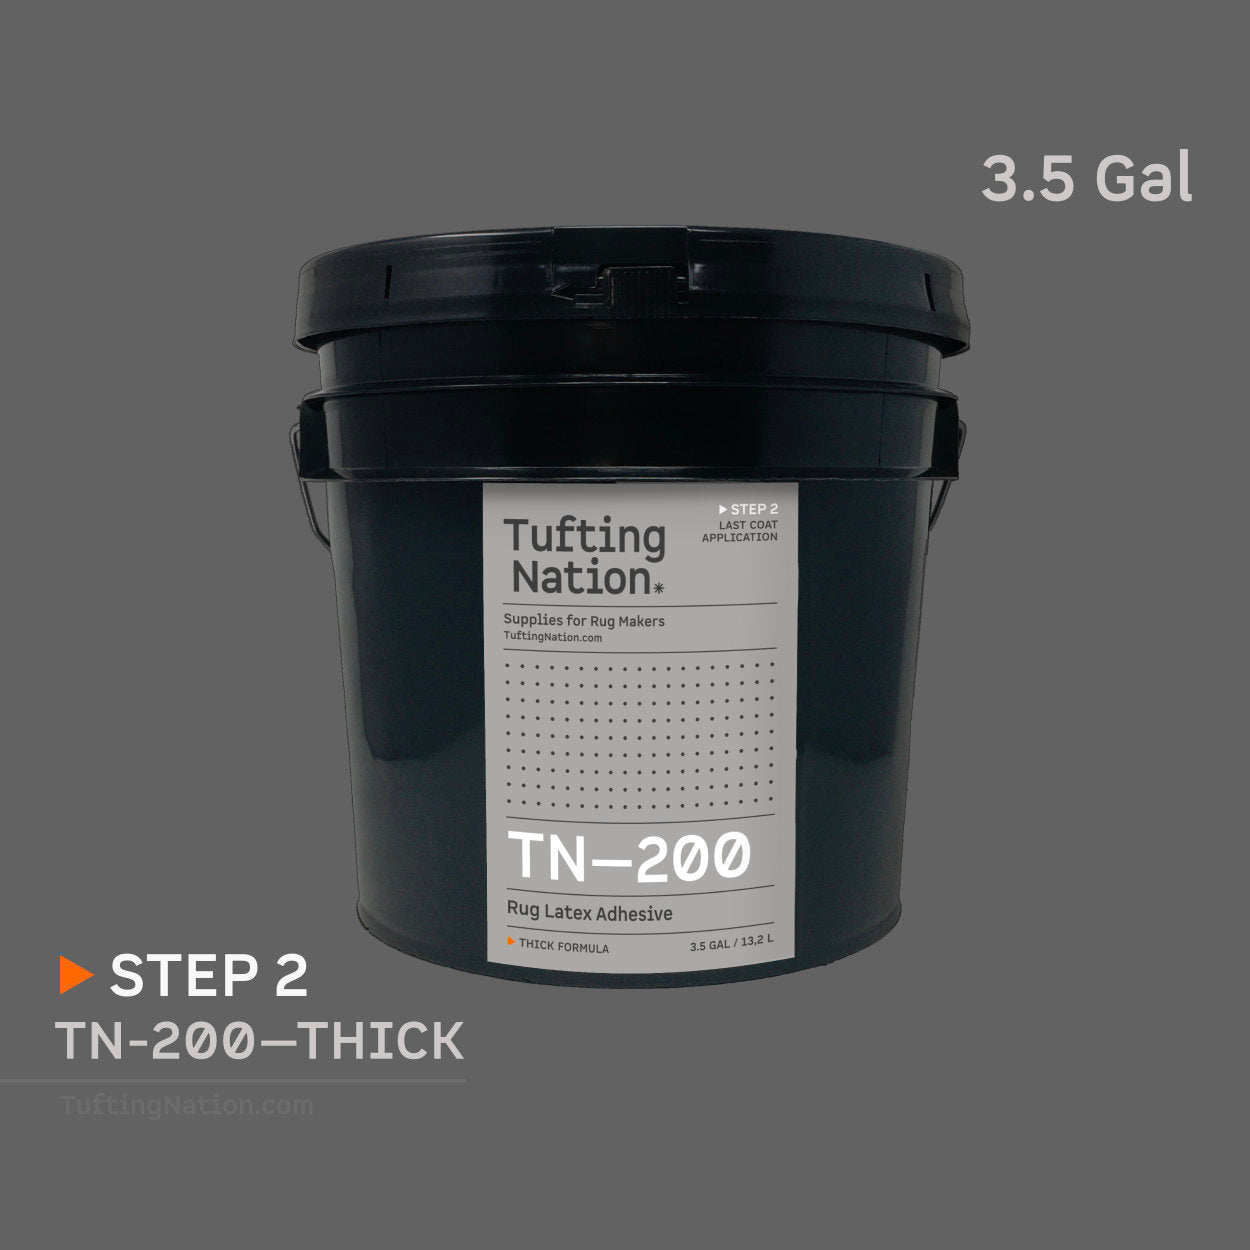 3.5 gallon of TN-200 Thick Carpet Adhesive | TuftingNation